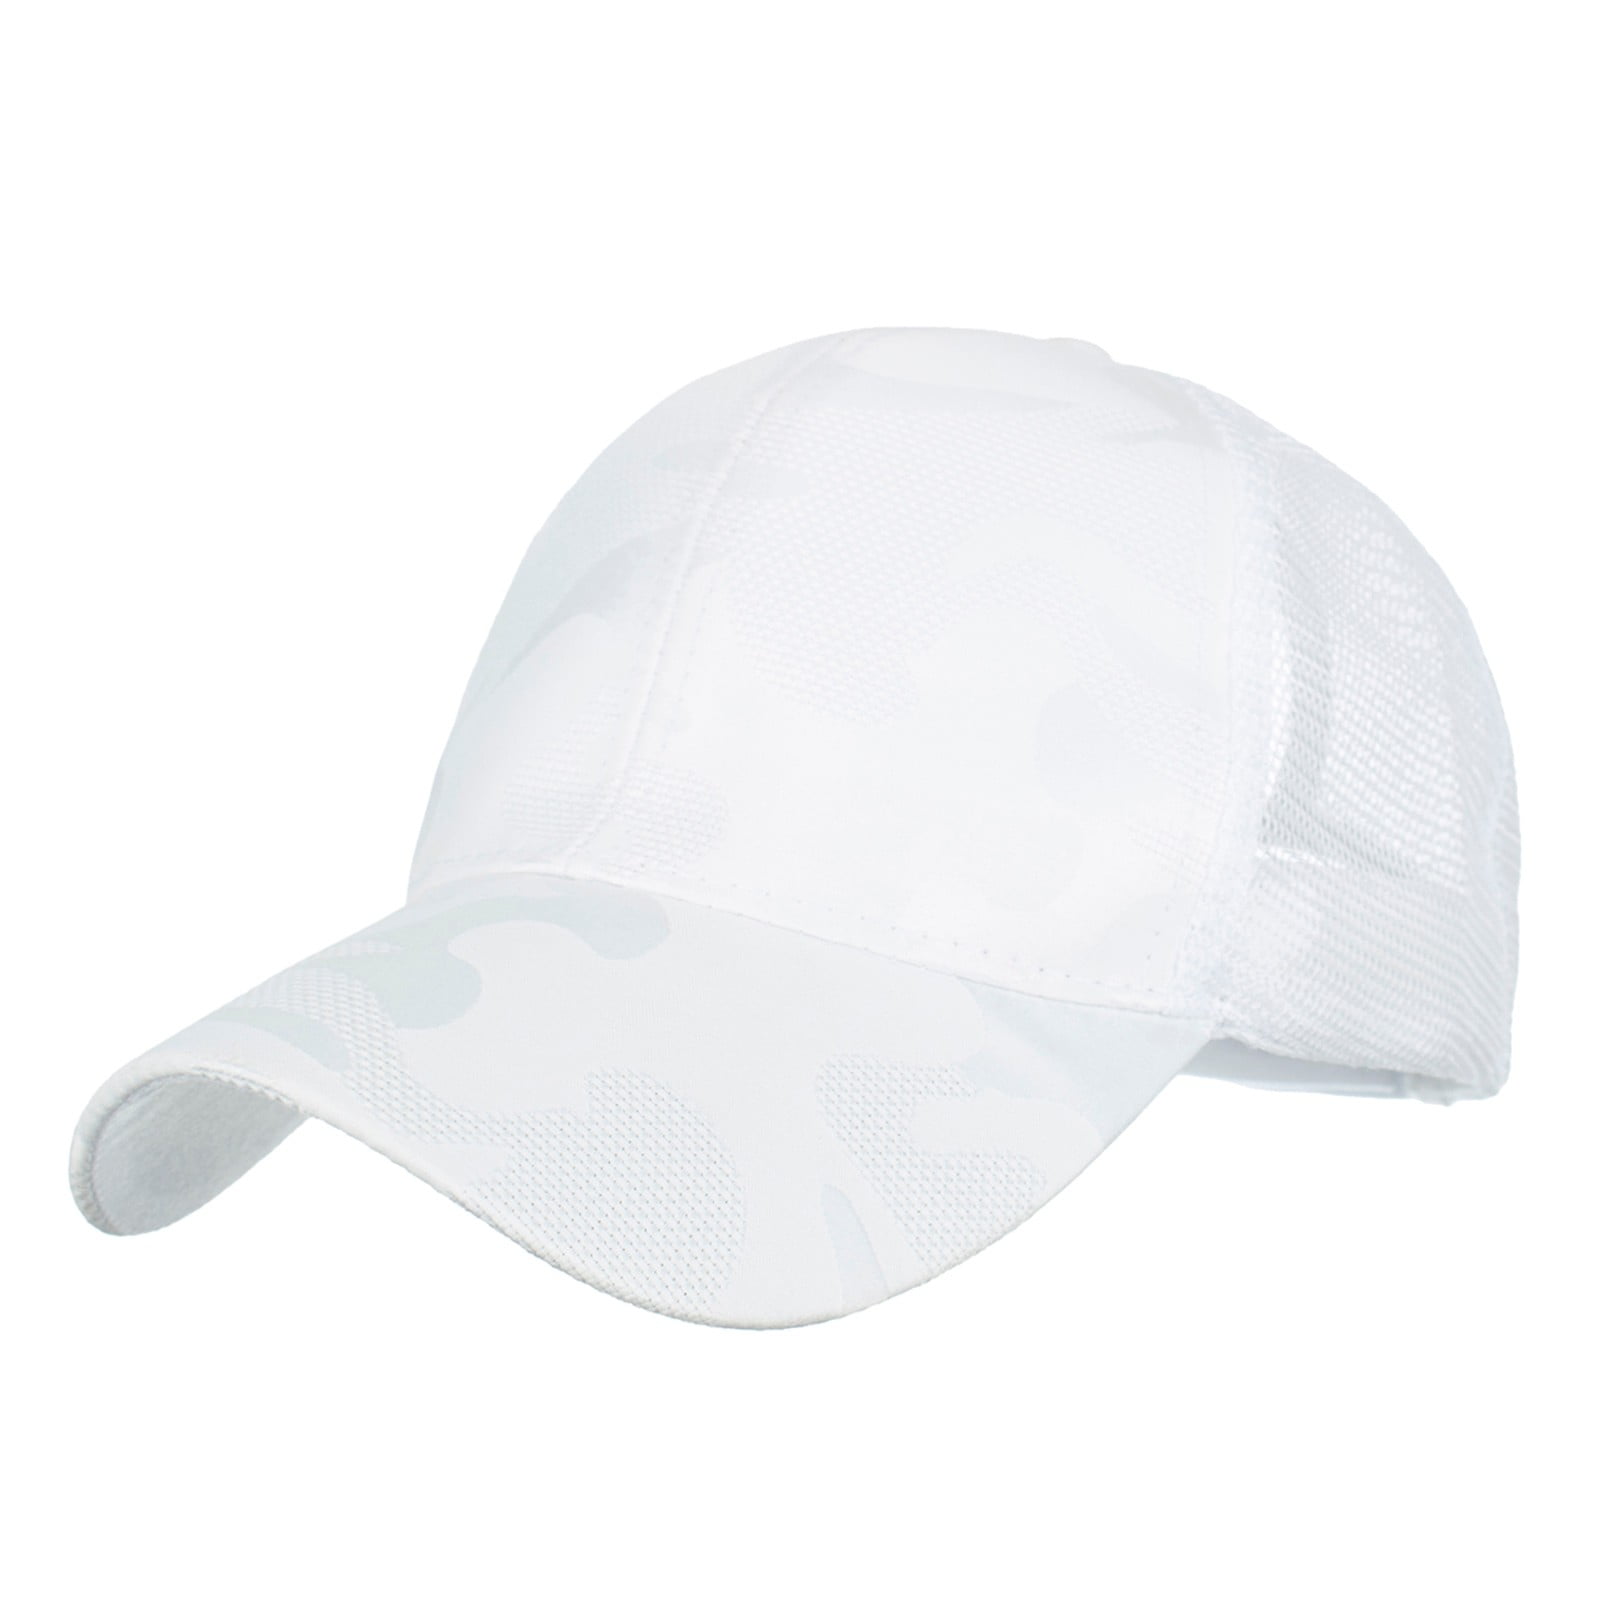 Breathable Waves Snapback dad Caps Strapback Baseball Cap Hip-hop Hats for Men Women Fitted Hat